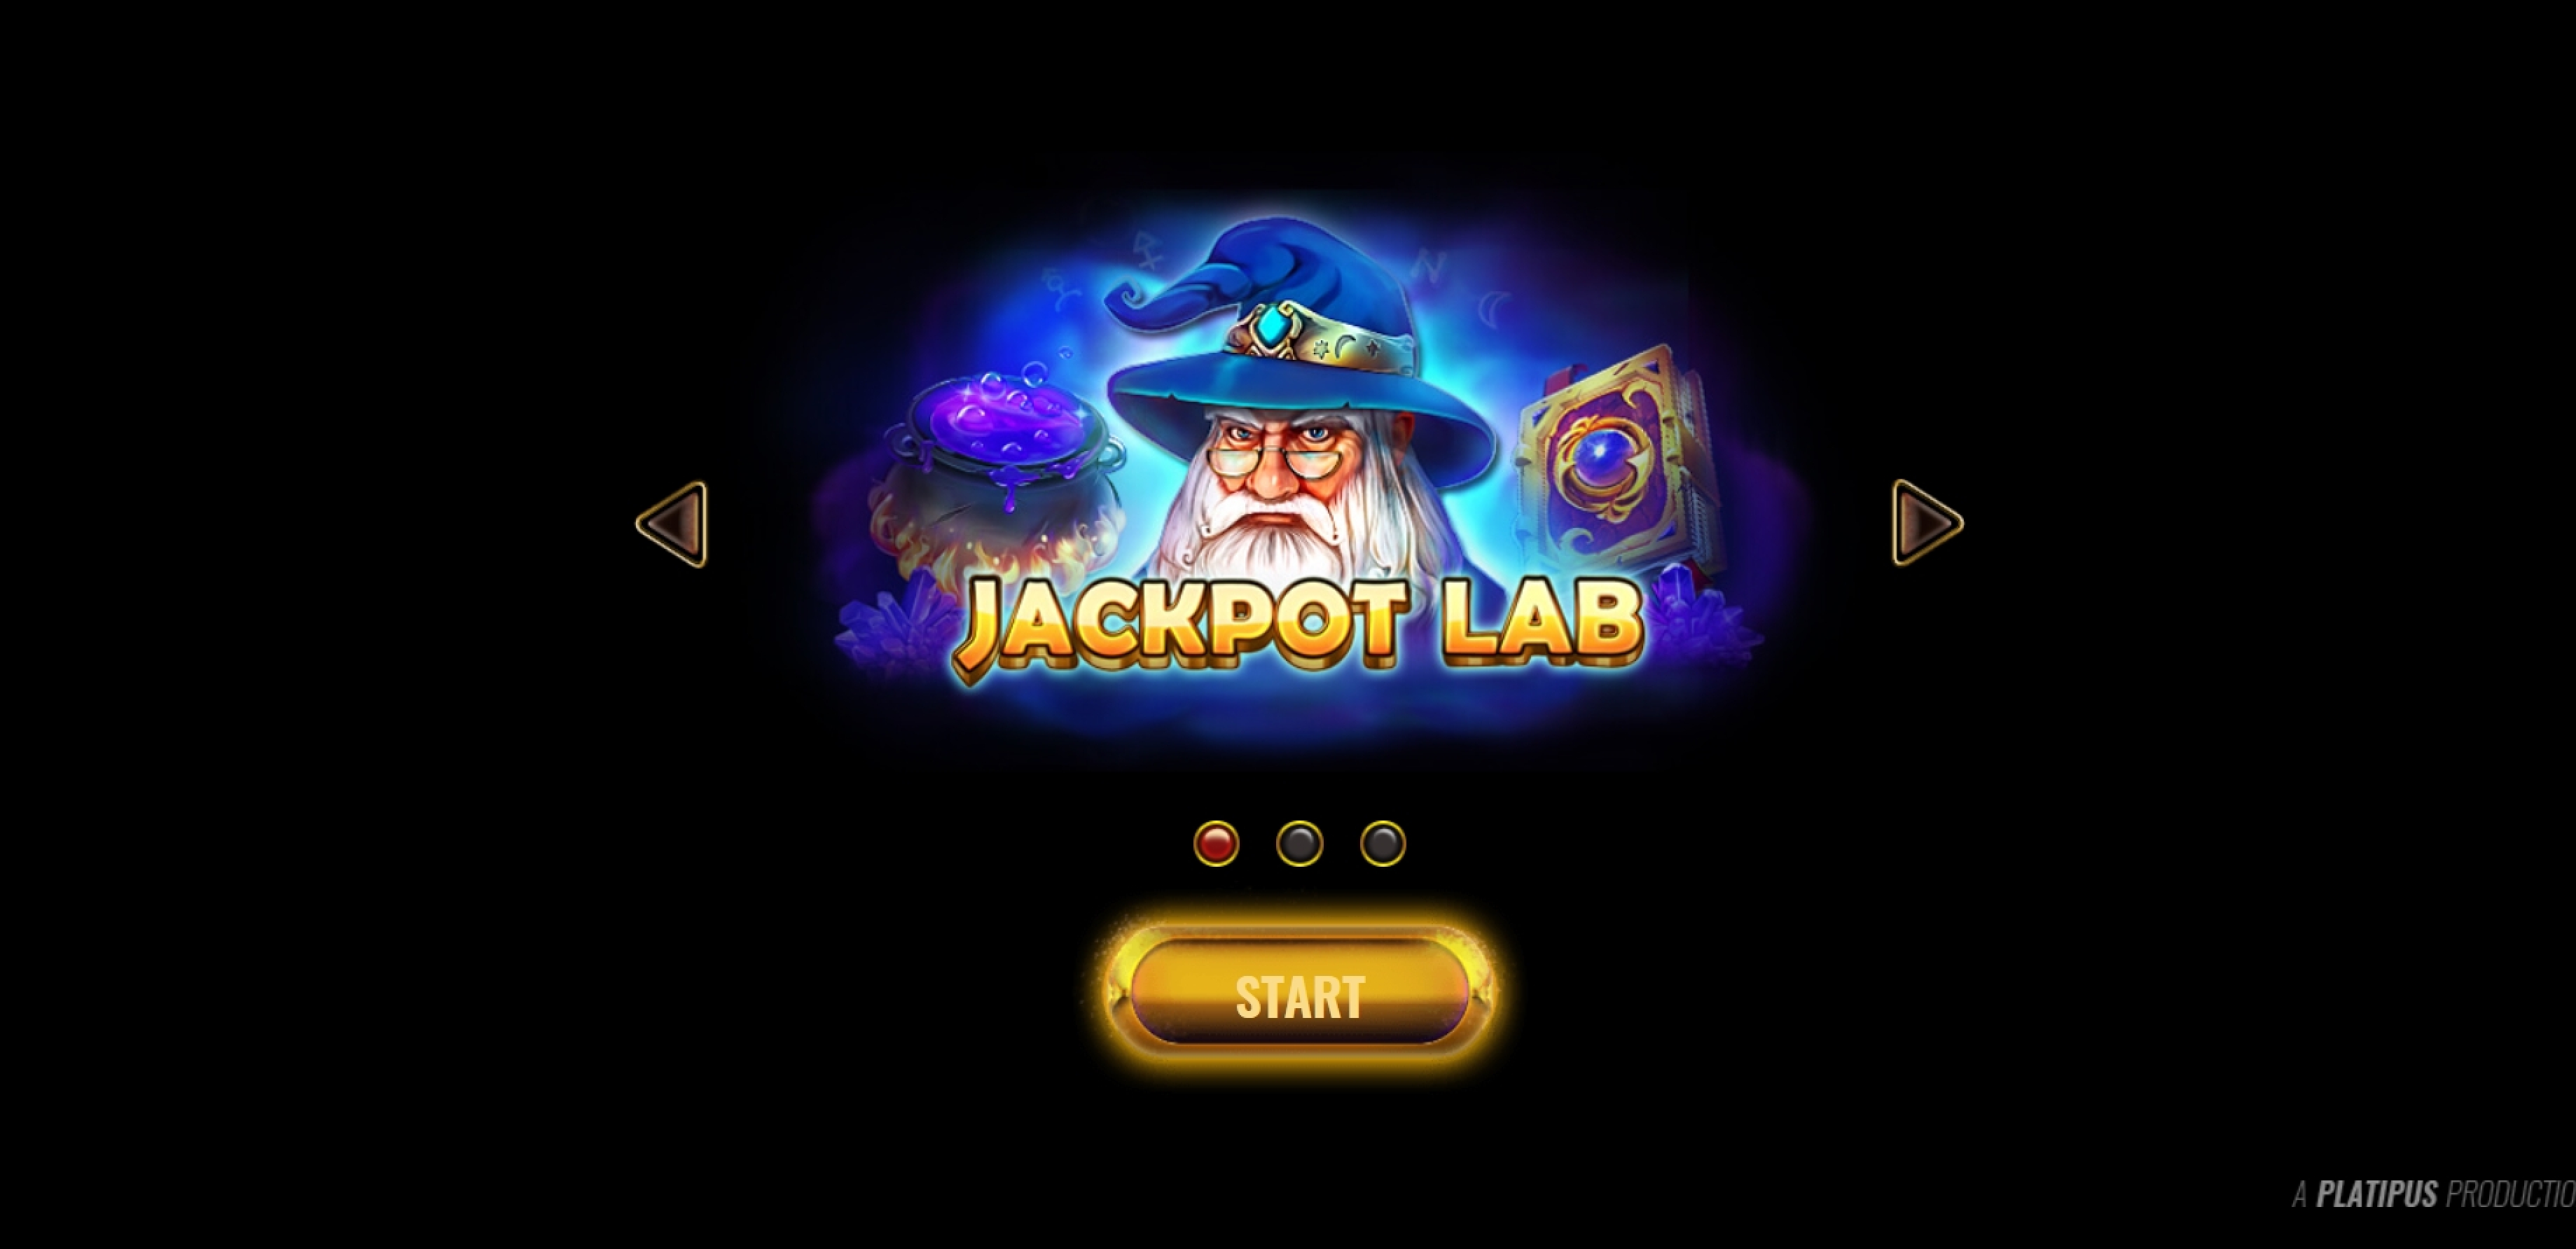 Play Jackpot Lab Free Casino Slot Game by Platipus